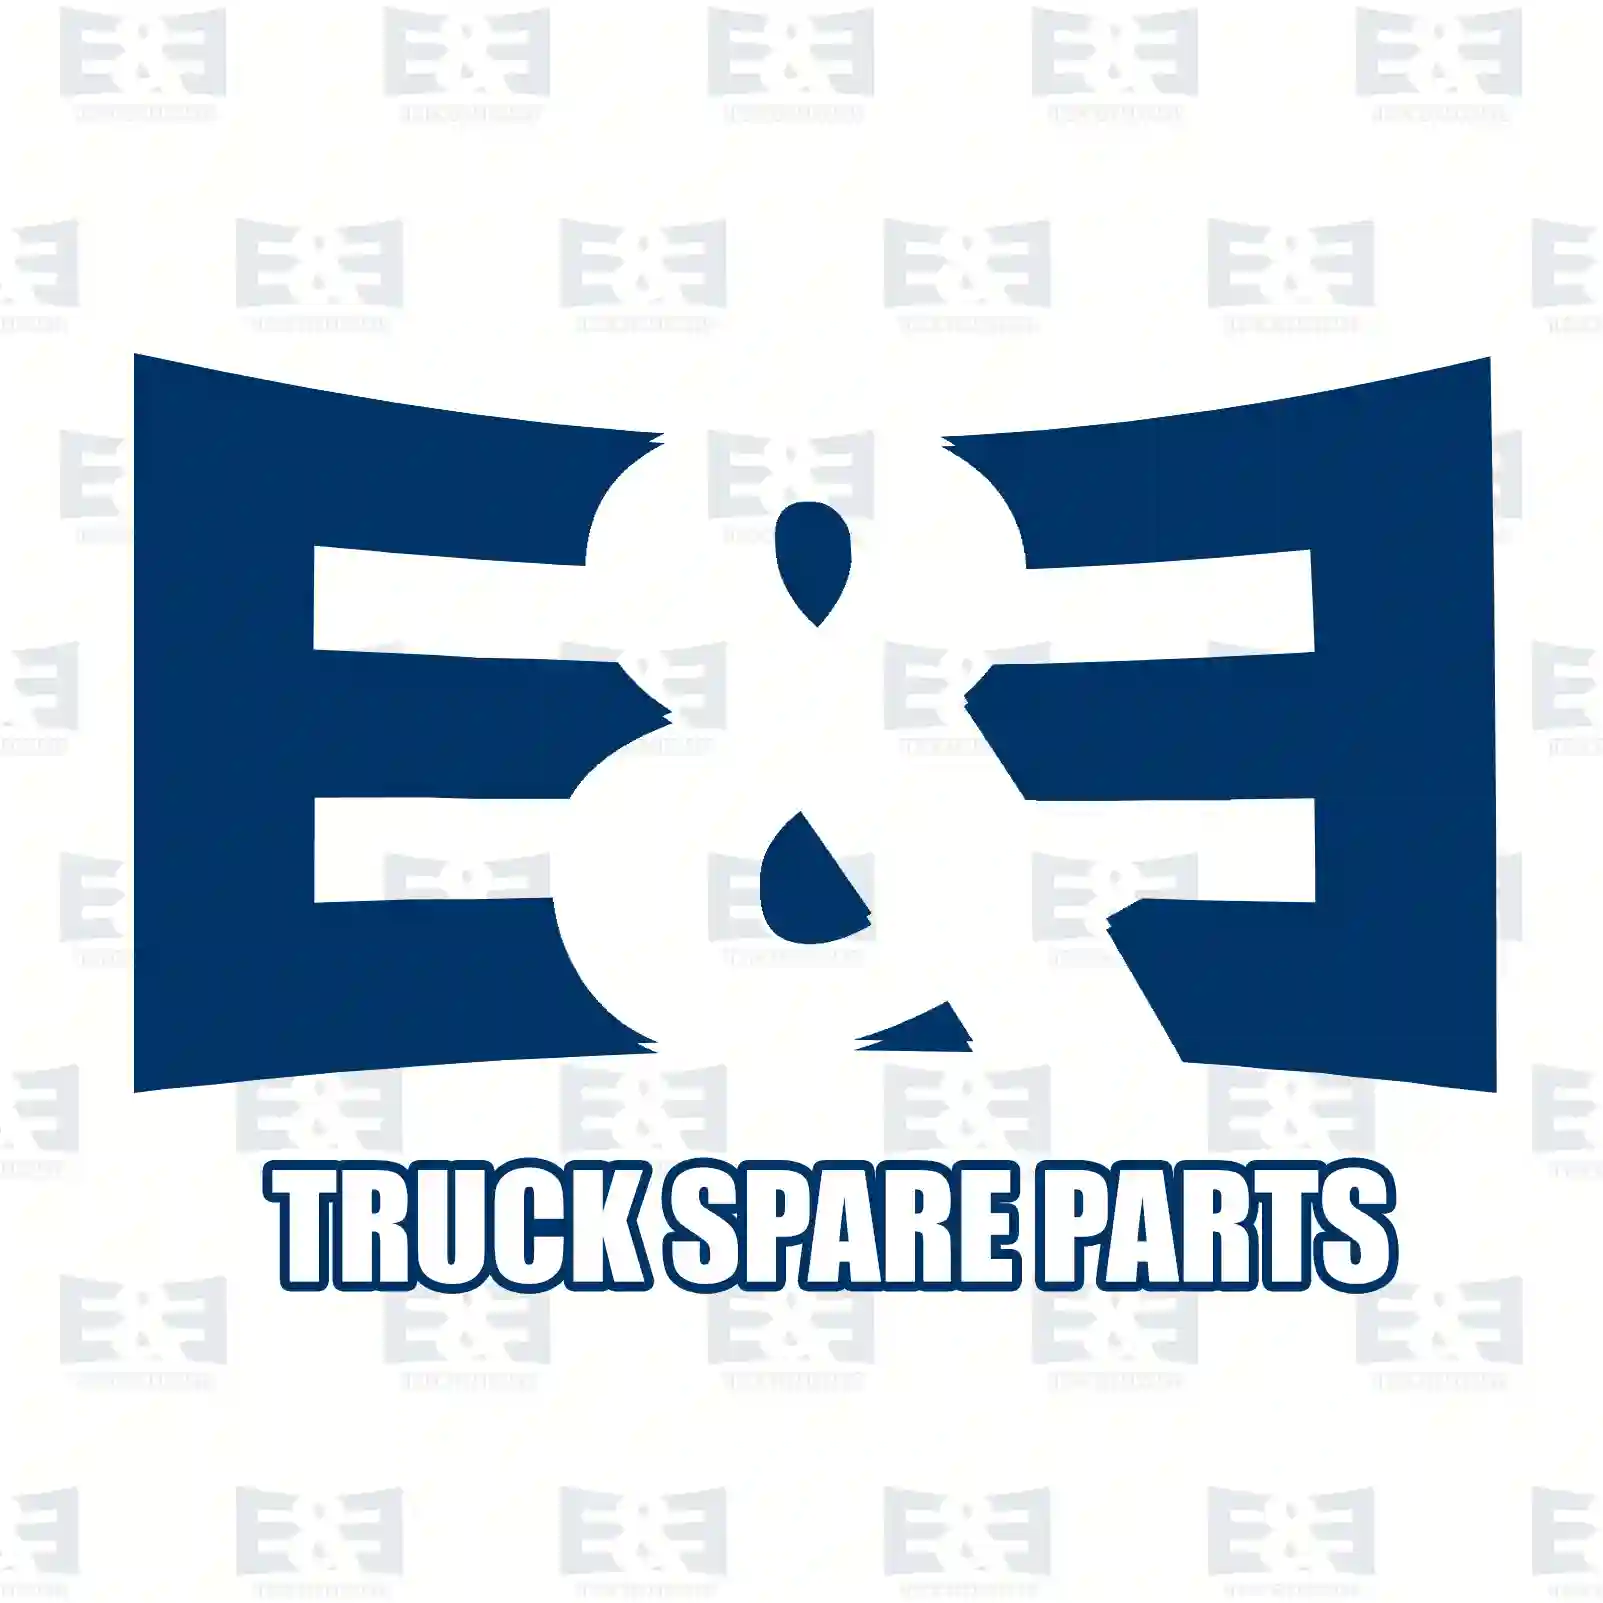 Fan Fan with clutch, EE No 2E2203035 ,  oem no:21990515 E&E Truck Spare Parts | Truck Spare Parts, Auotomotive Spare Parts